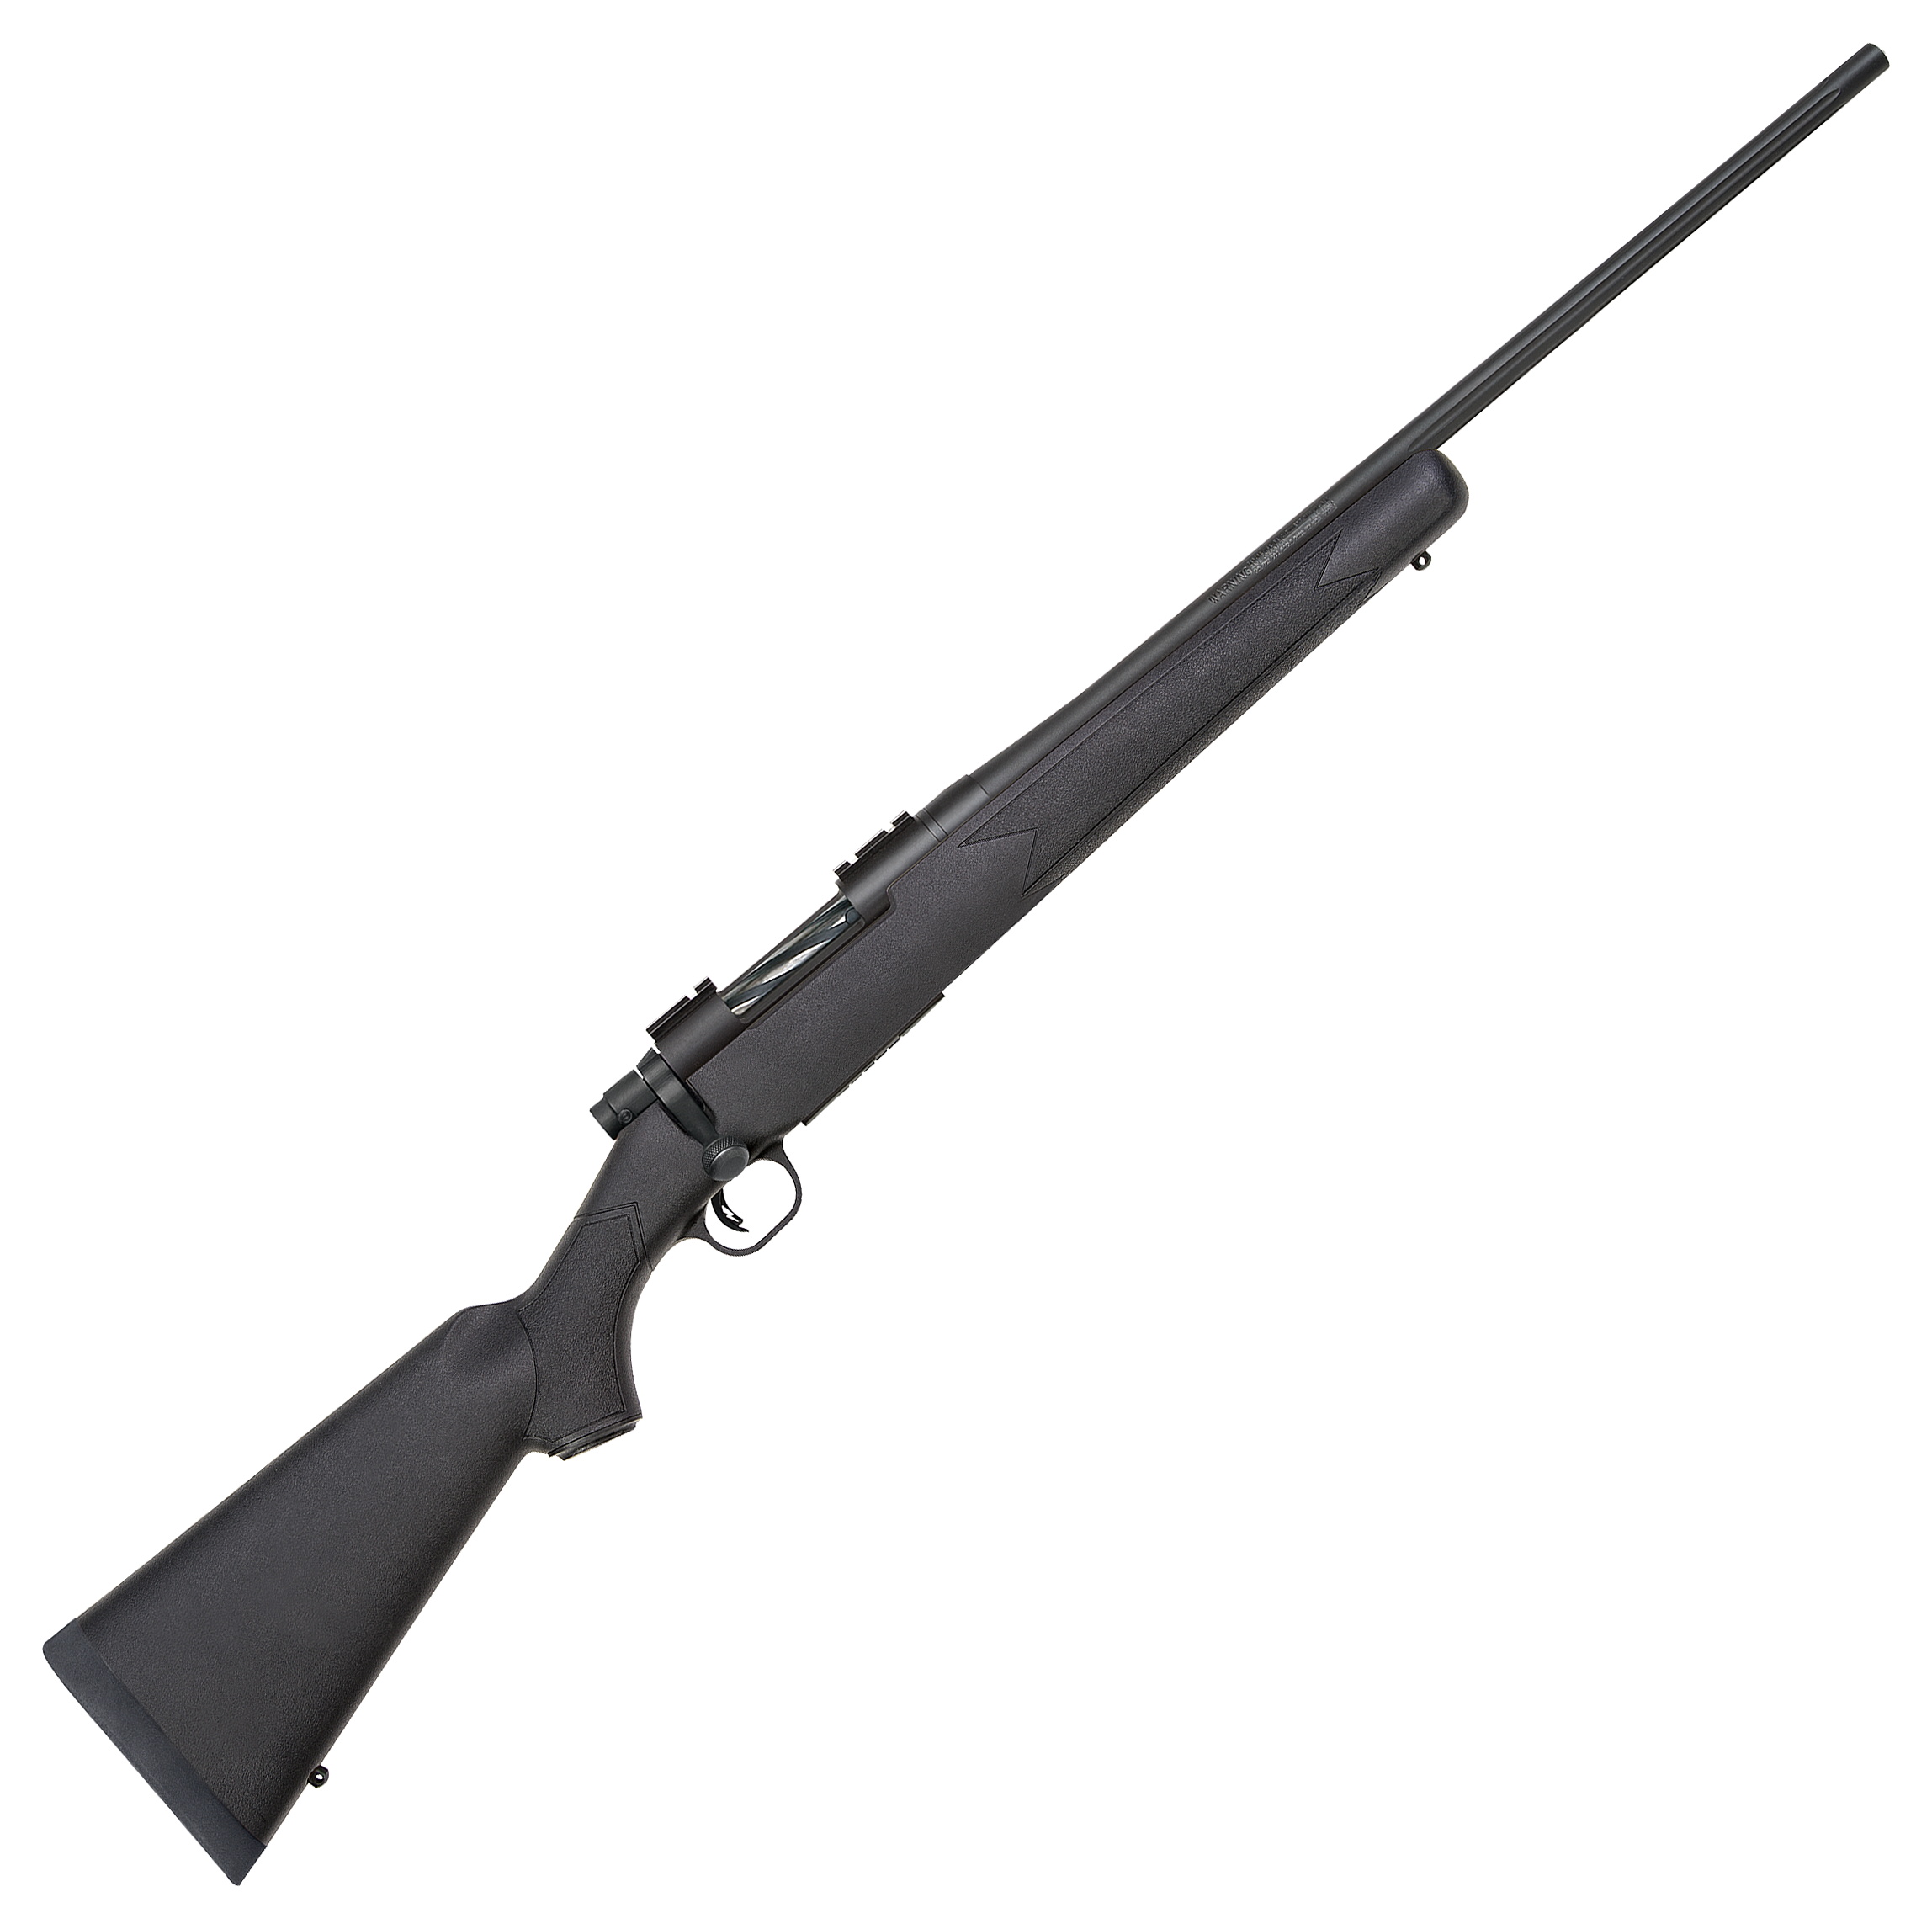 Mossberg 27877 Patriot Bolt Action Rifle 25-06 REM, RH, 22 in, Blue, Syn Stk, 5+1 Rnd, LBA Adj Trgr, 0902-1264